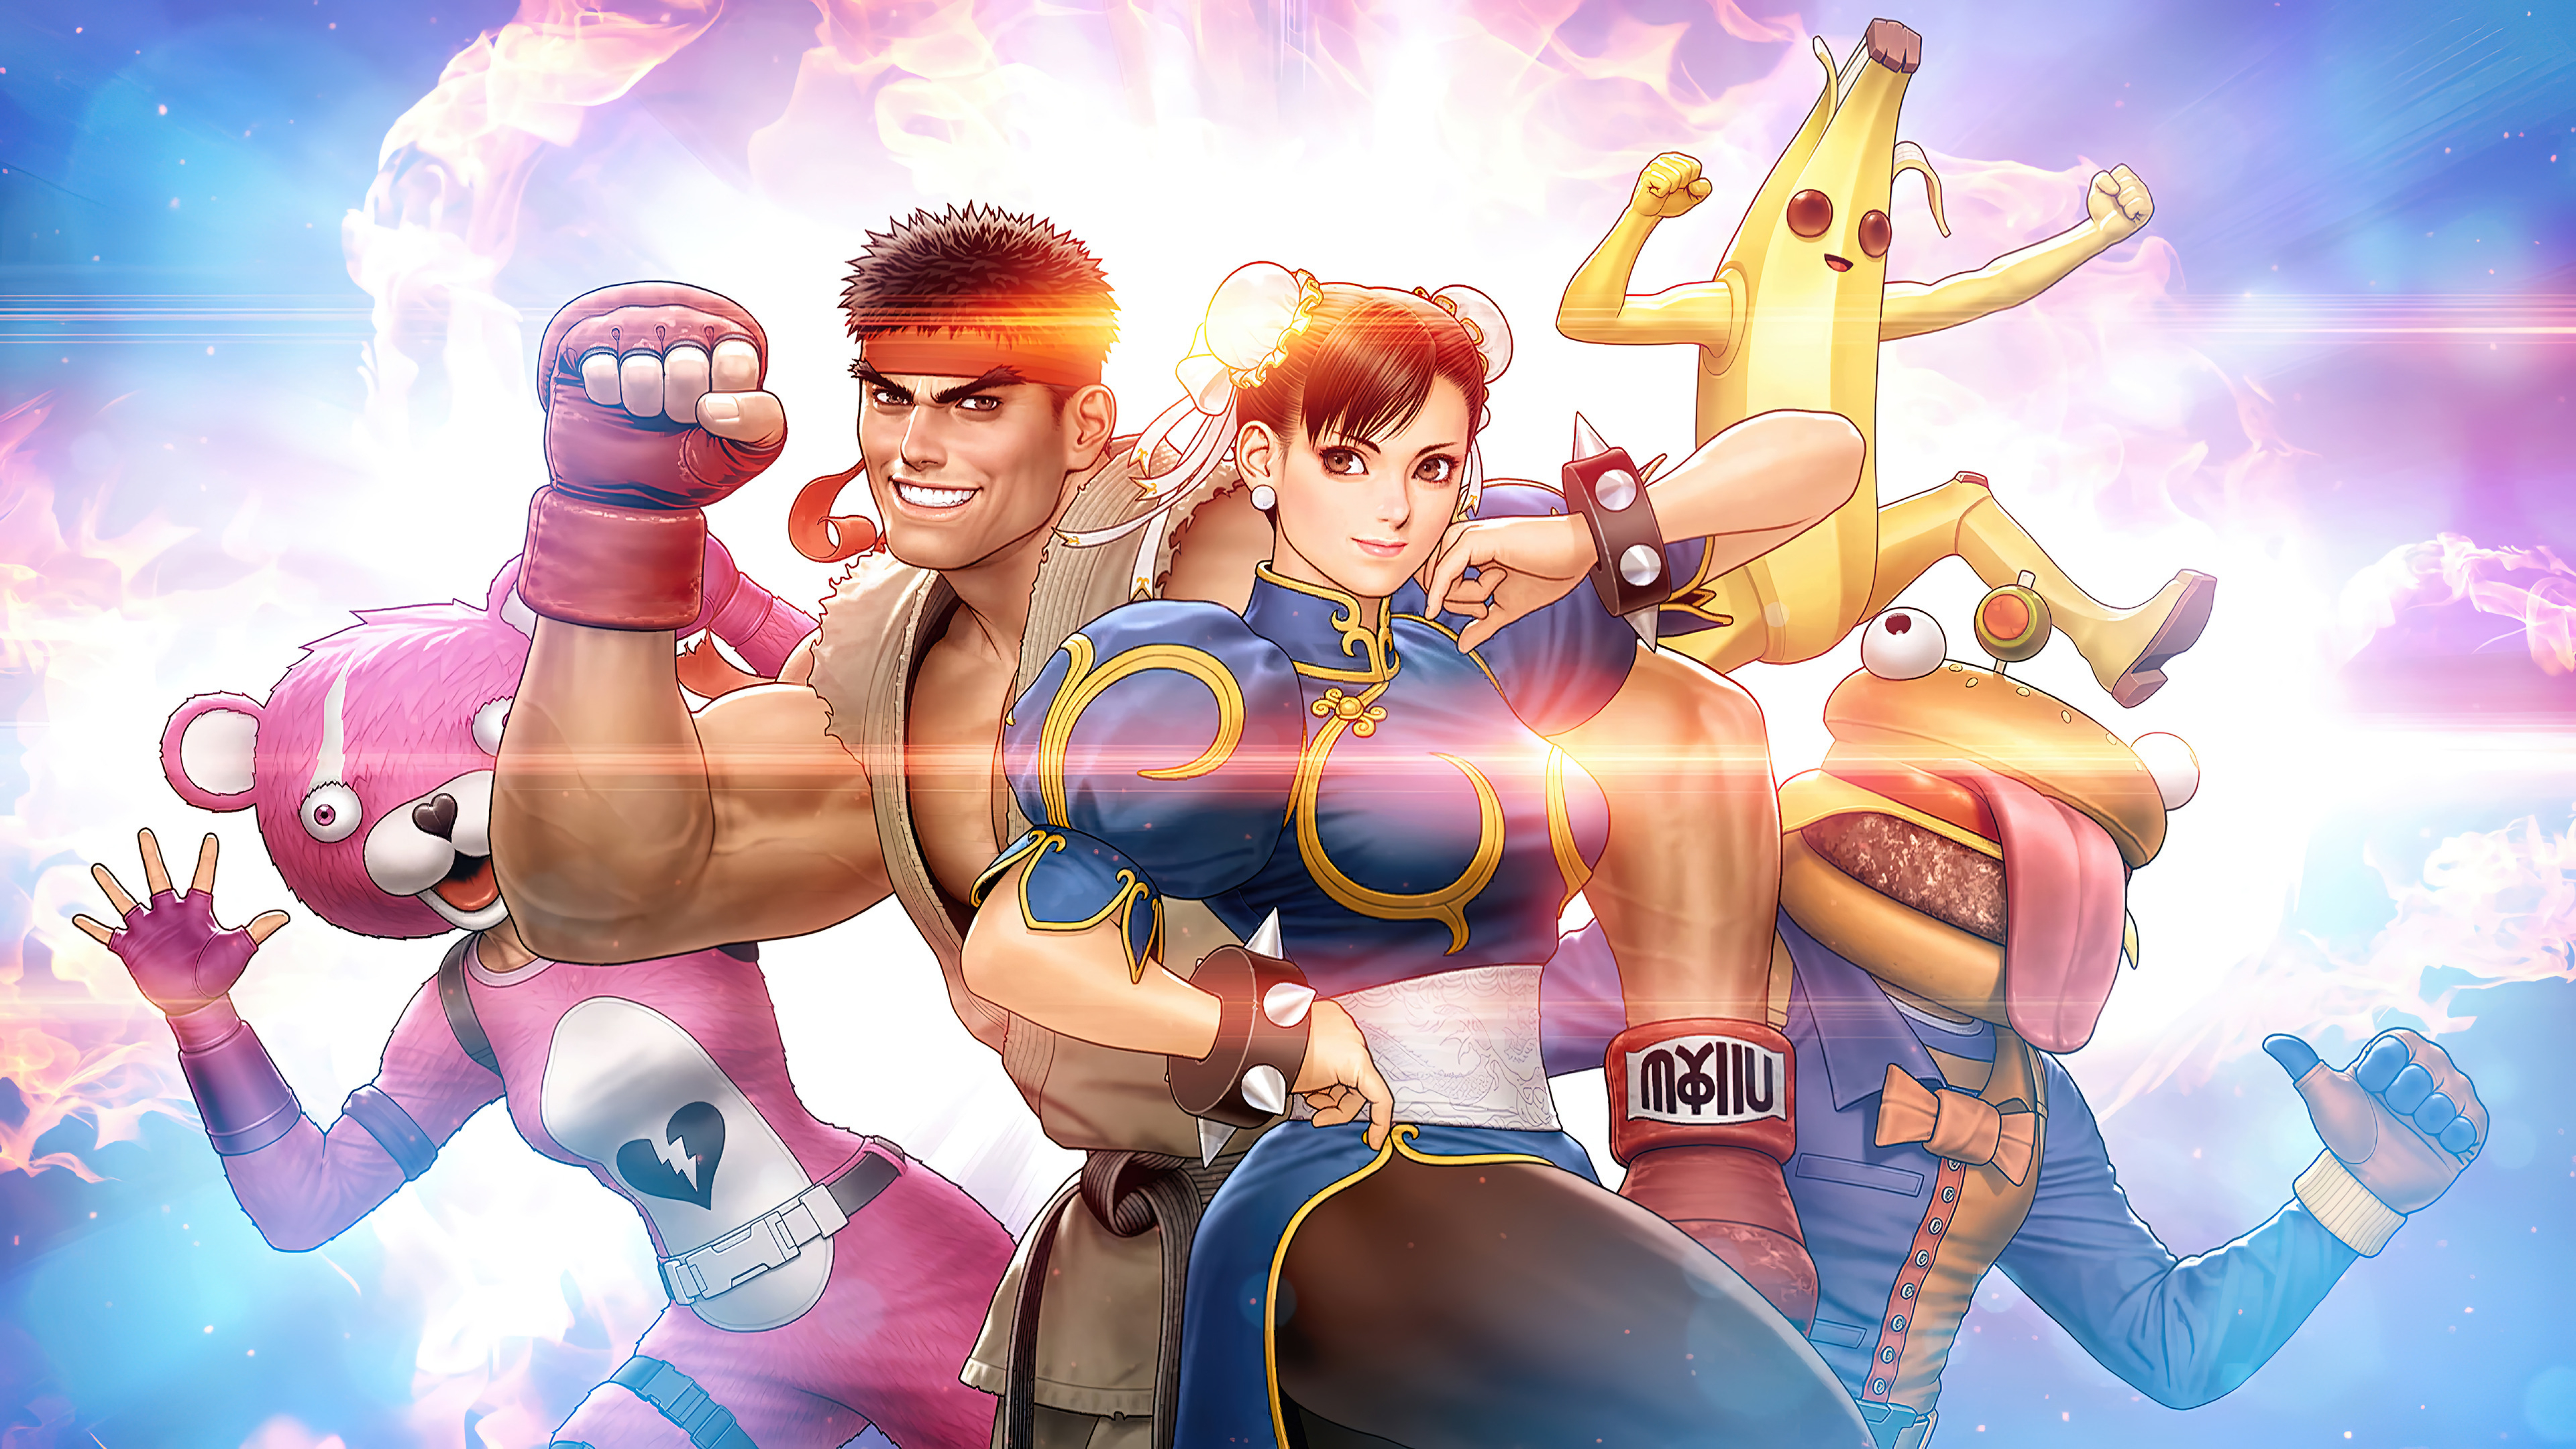 1 Personagem Surpresa Street Fighter Continue? Ken Ryu